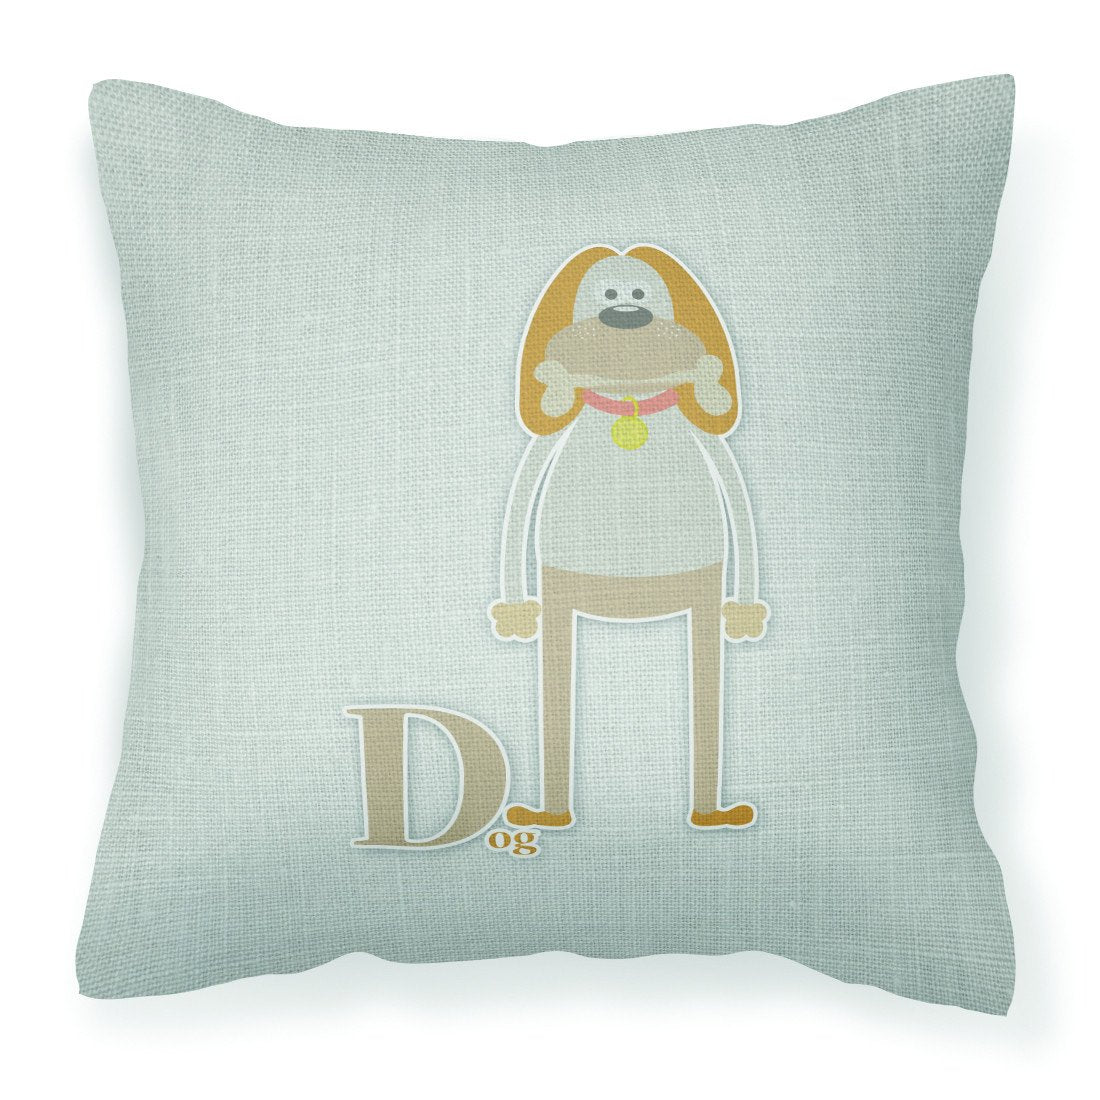 Alphabet D for Dog Fabric Decorative Pillow BB5729PW1818 by Caroline's Treasures